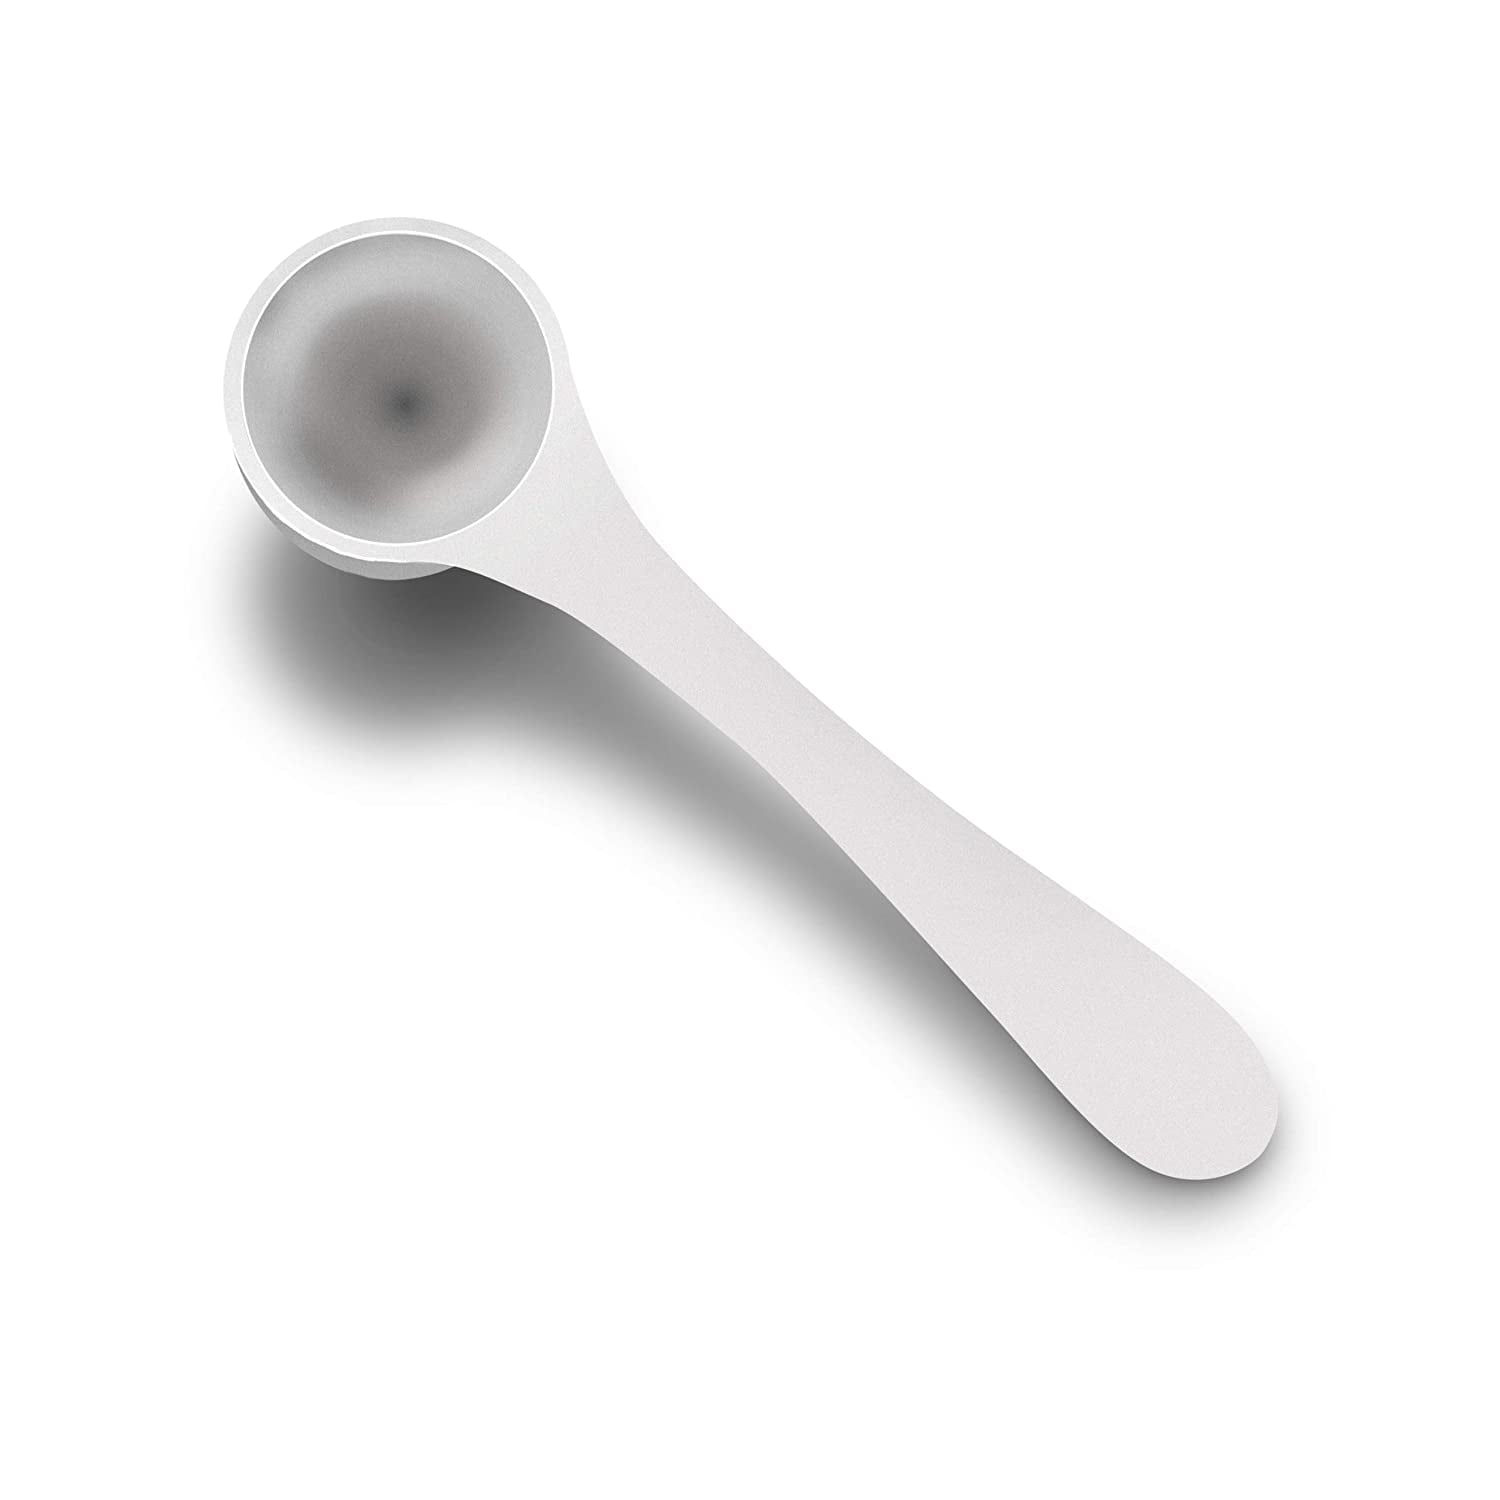  10 Gram 5 White Measuring Smidgen Micro Scoop 20 Ml PP Lab  Measuring Mini Spoons for Powder Measurement or Baking - Static-free  Plastic Tiny Scoops for Grams Small Measure: Home & Kitchen